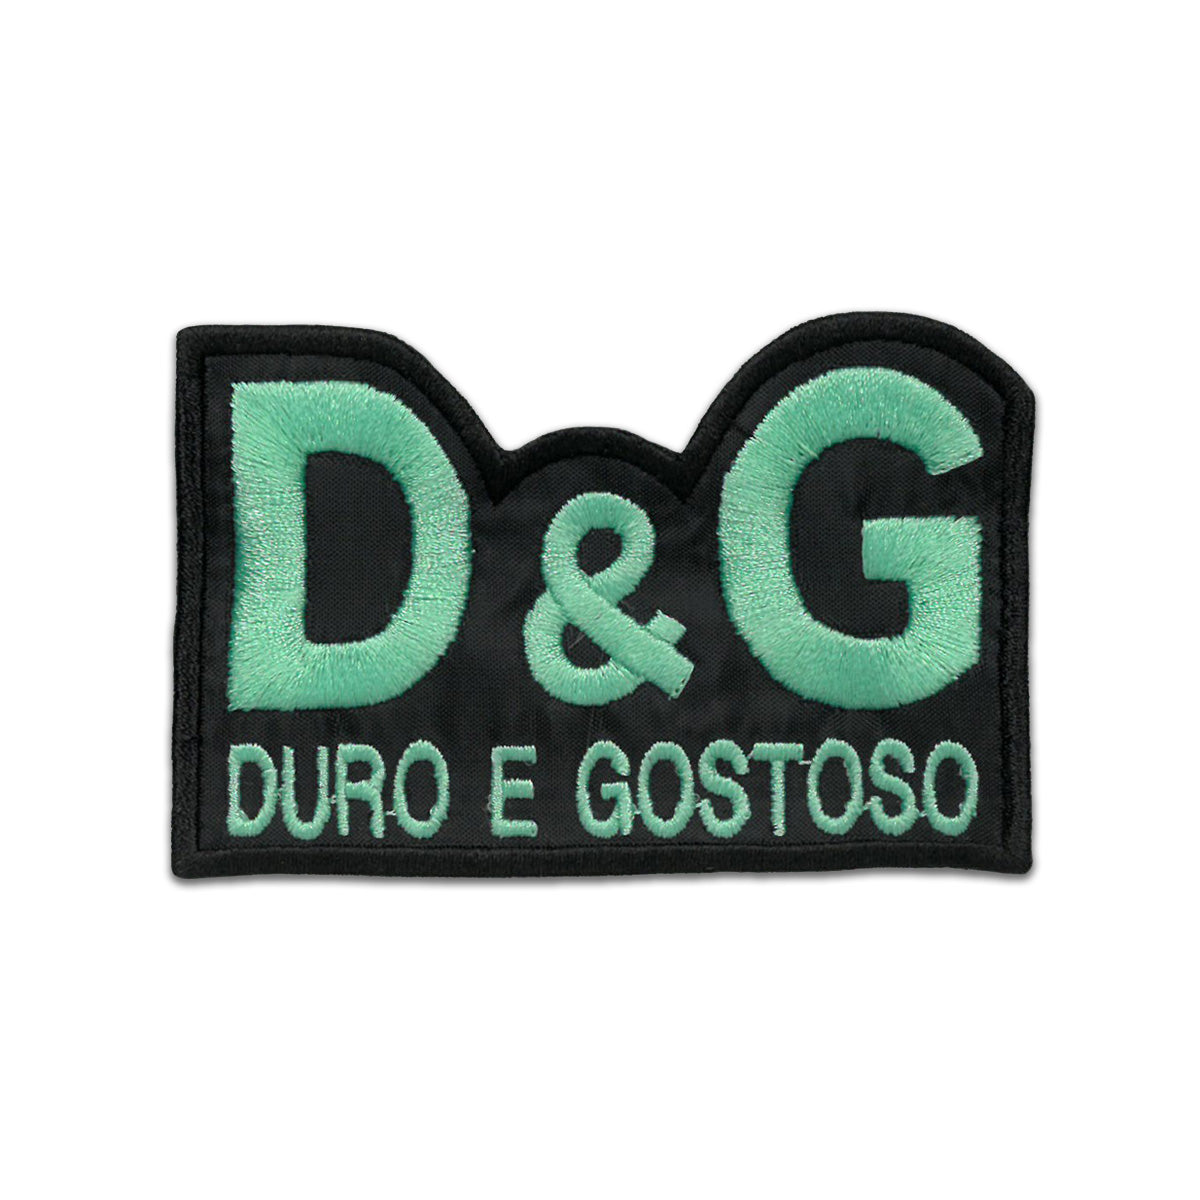 Duro & Gostoso